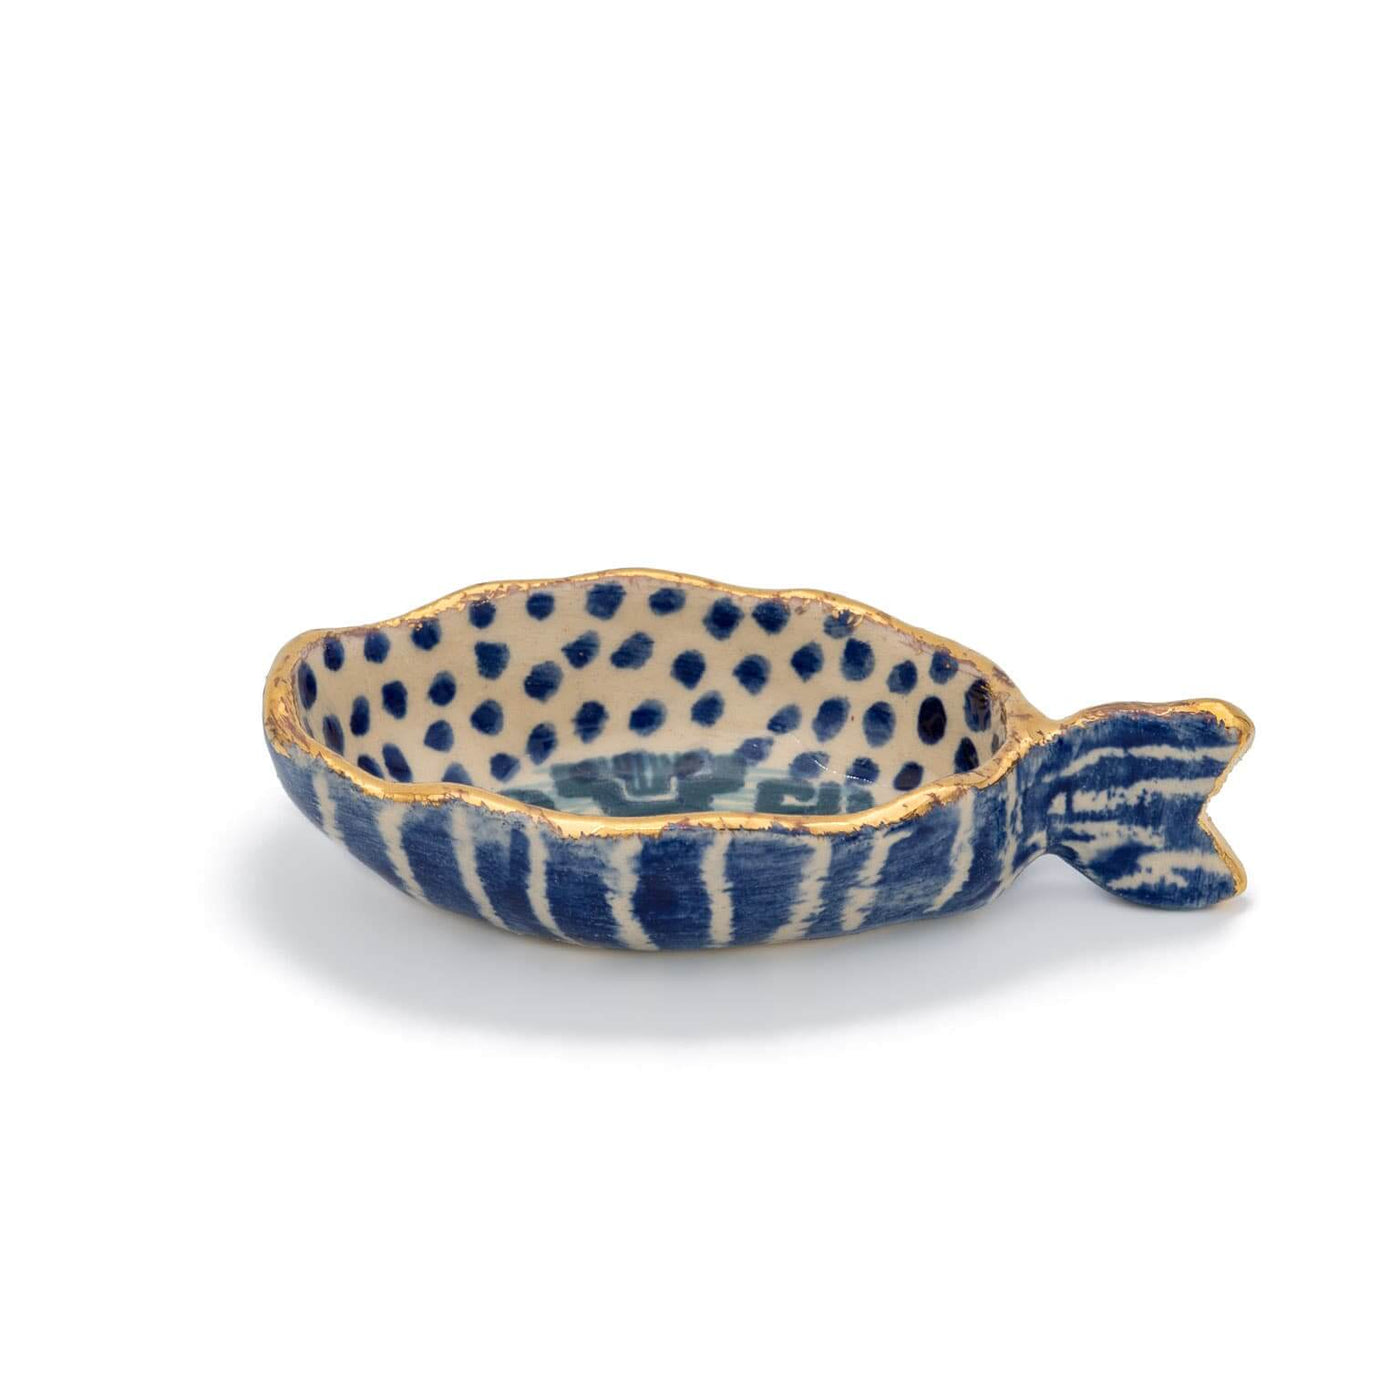 Mauritius-Handmade-Ceramic-Oyster Bowl “Ocean Dream” - Small-DodoMarket-Souvenirs